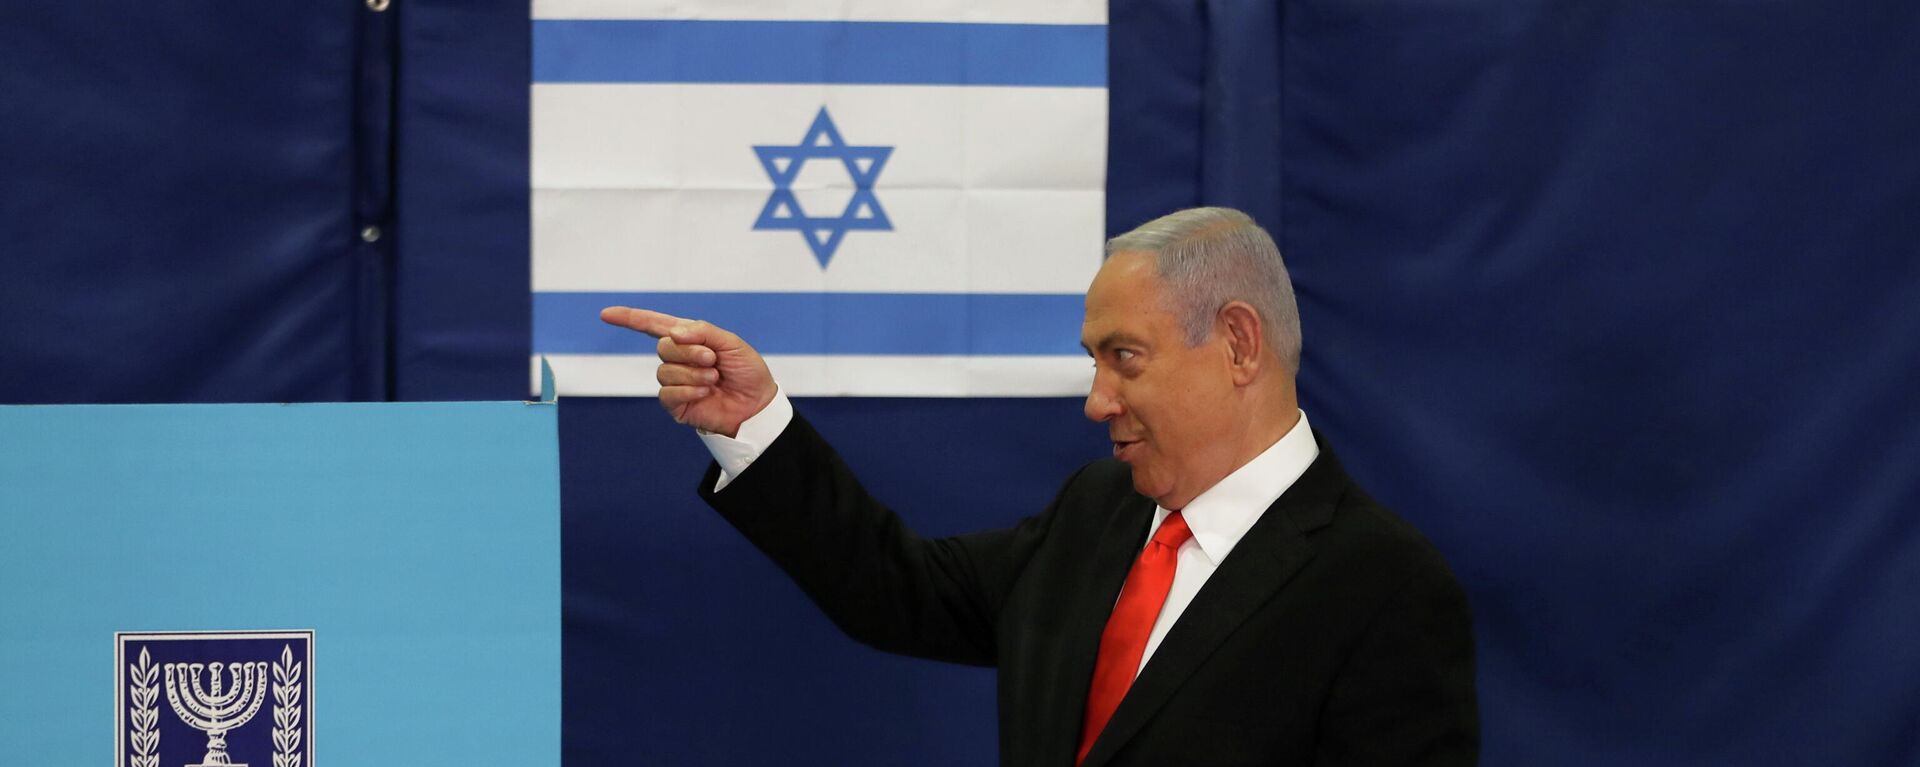 Benjamín Netanyahu, primer ministro israelí - Sputnik Mundo, 1920, 26.03.2021